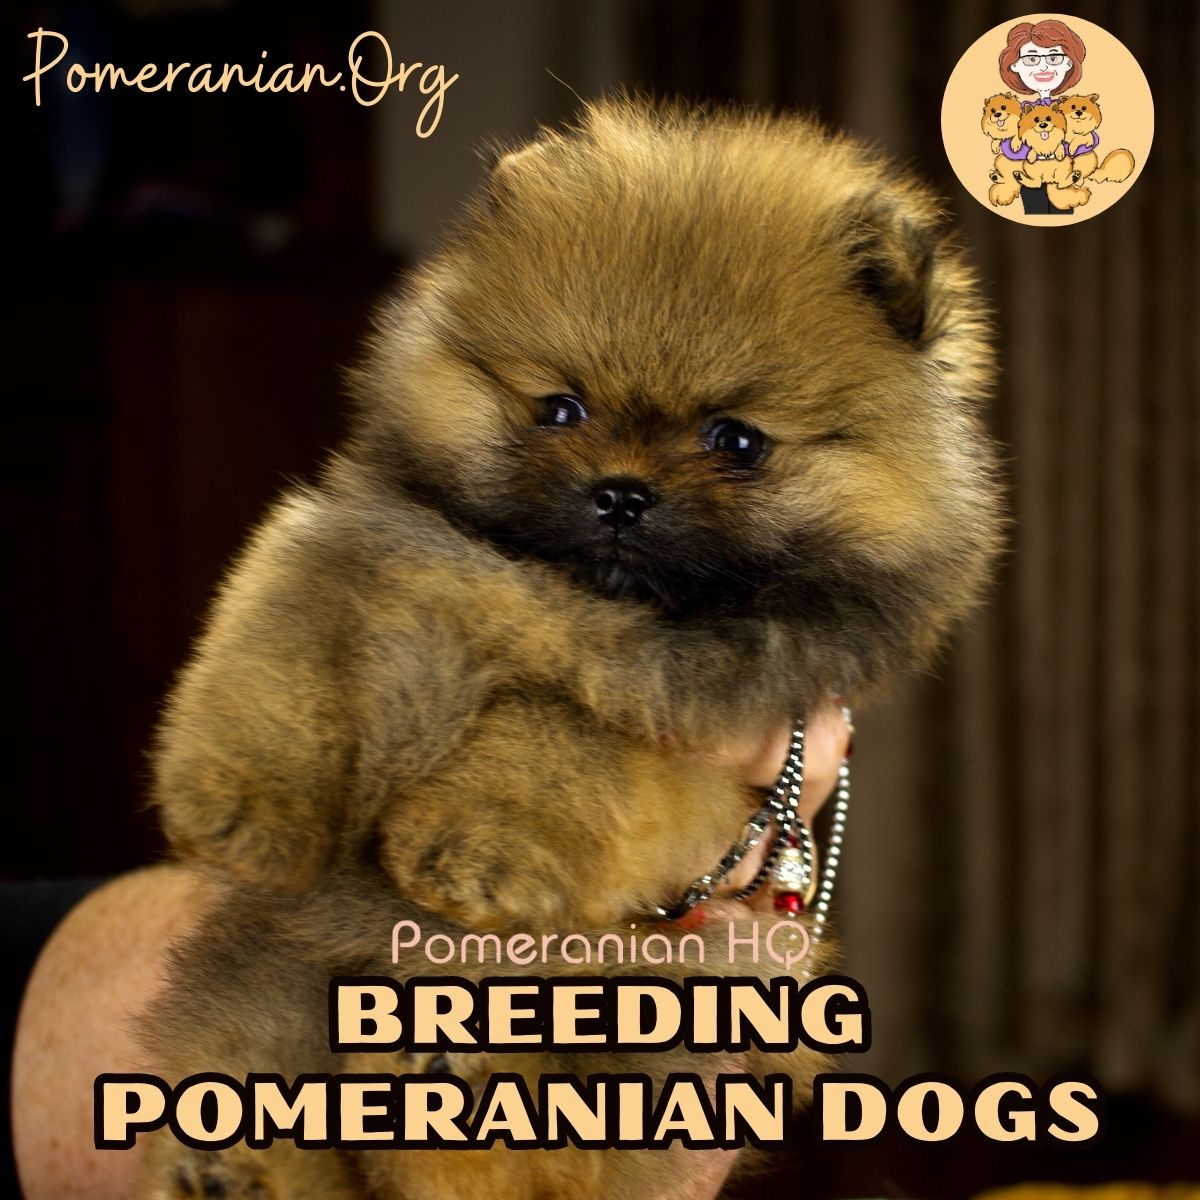 Breeding Pomeranian Dogs